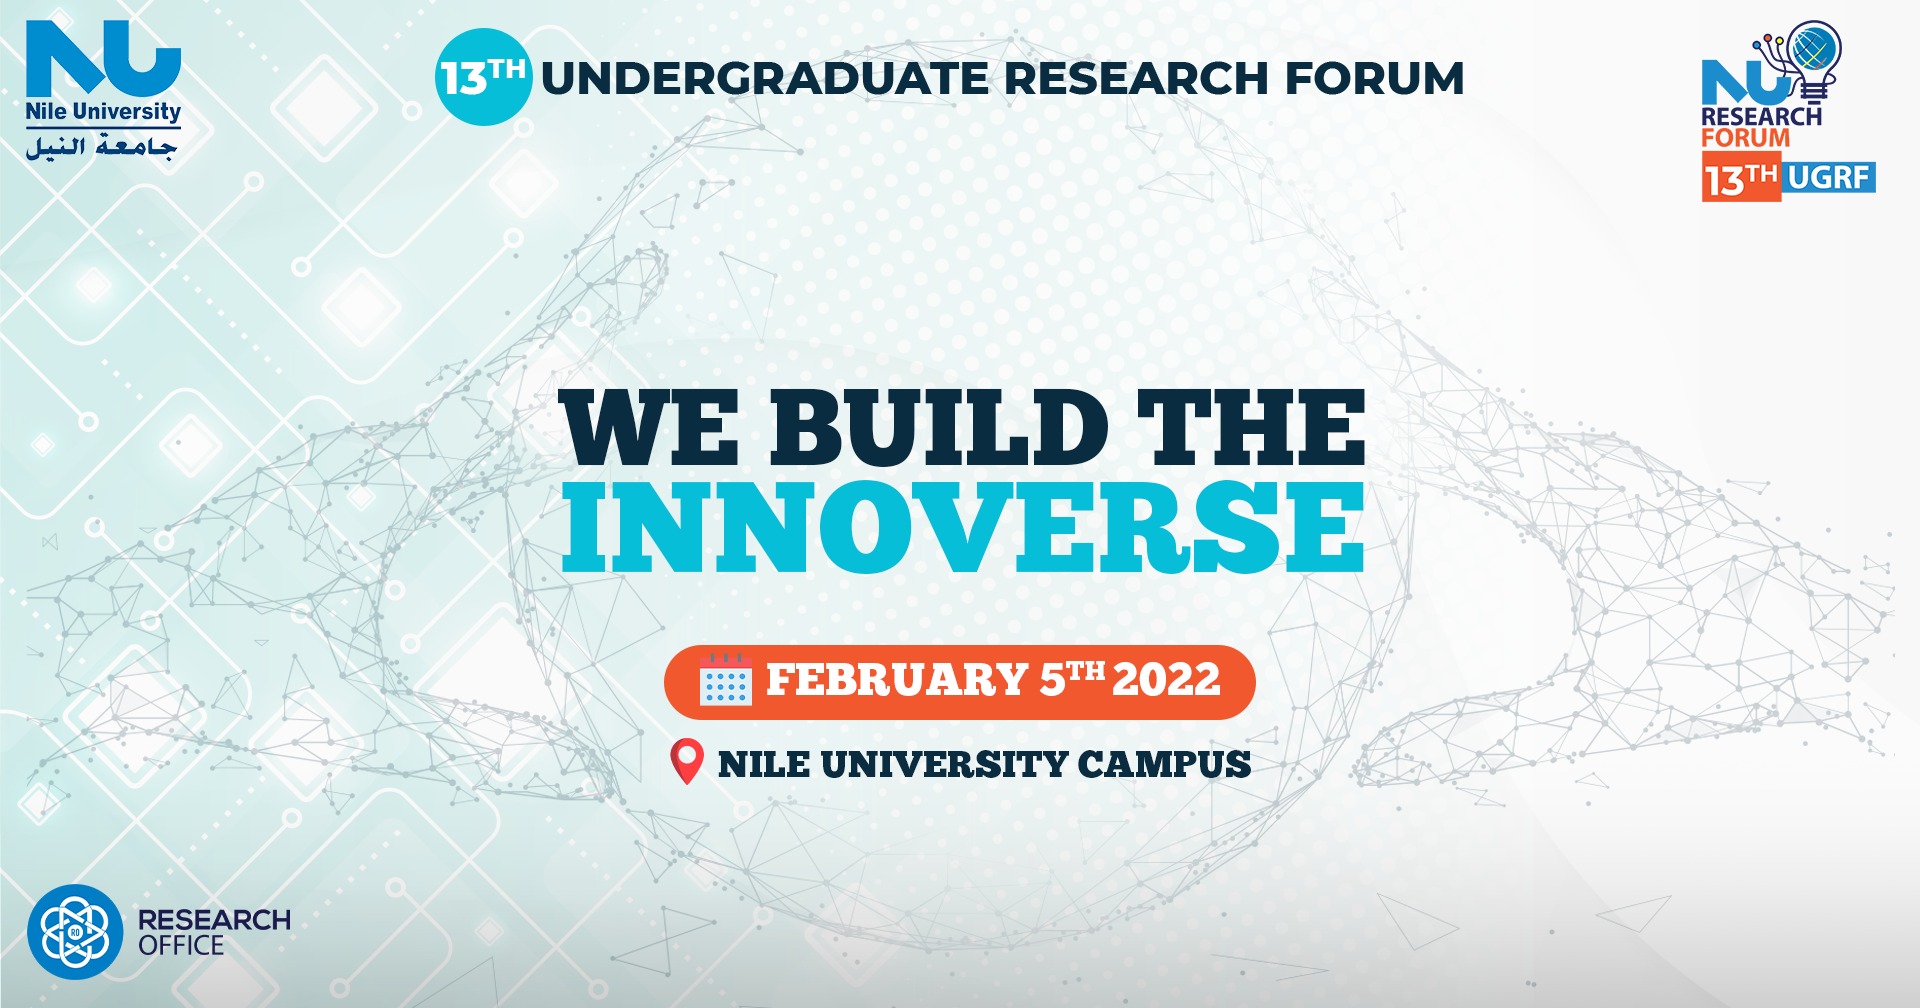 13th_undergraduate_research_forum_13th_ugrf_1.jpg